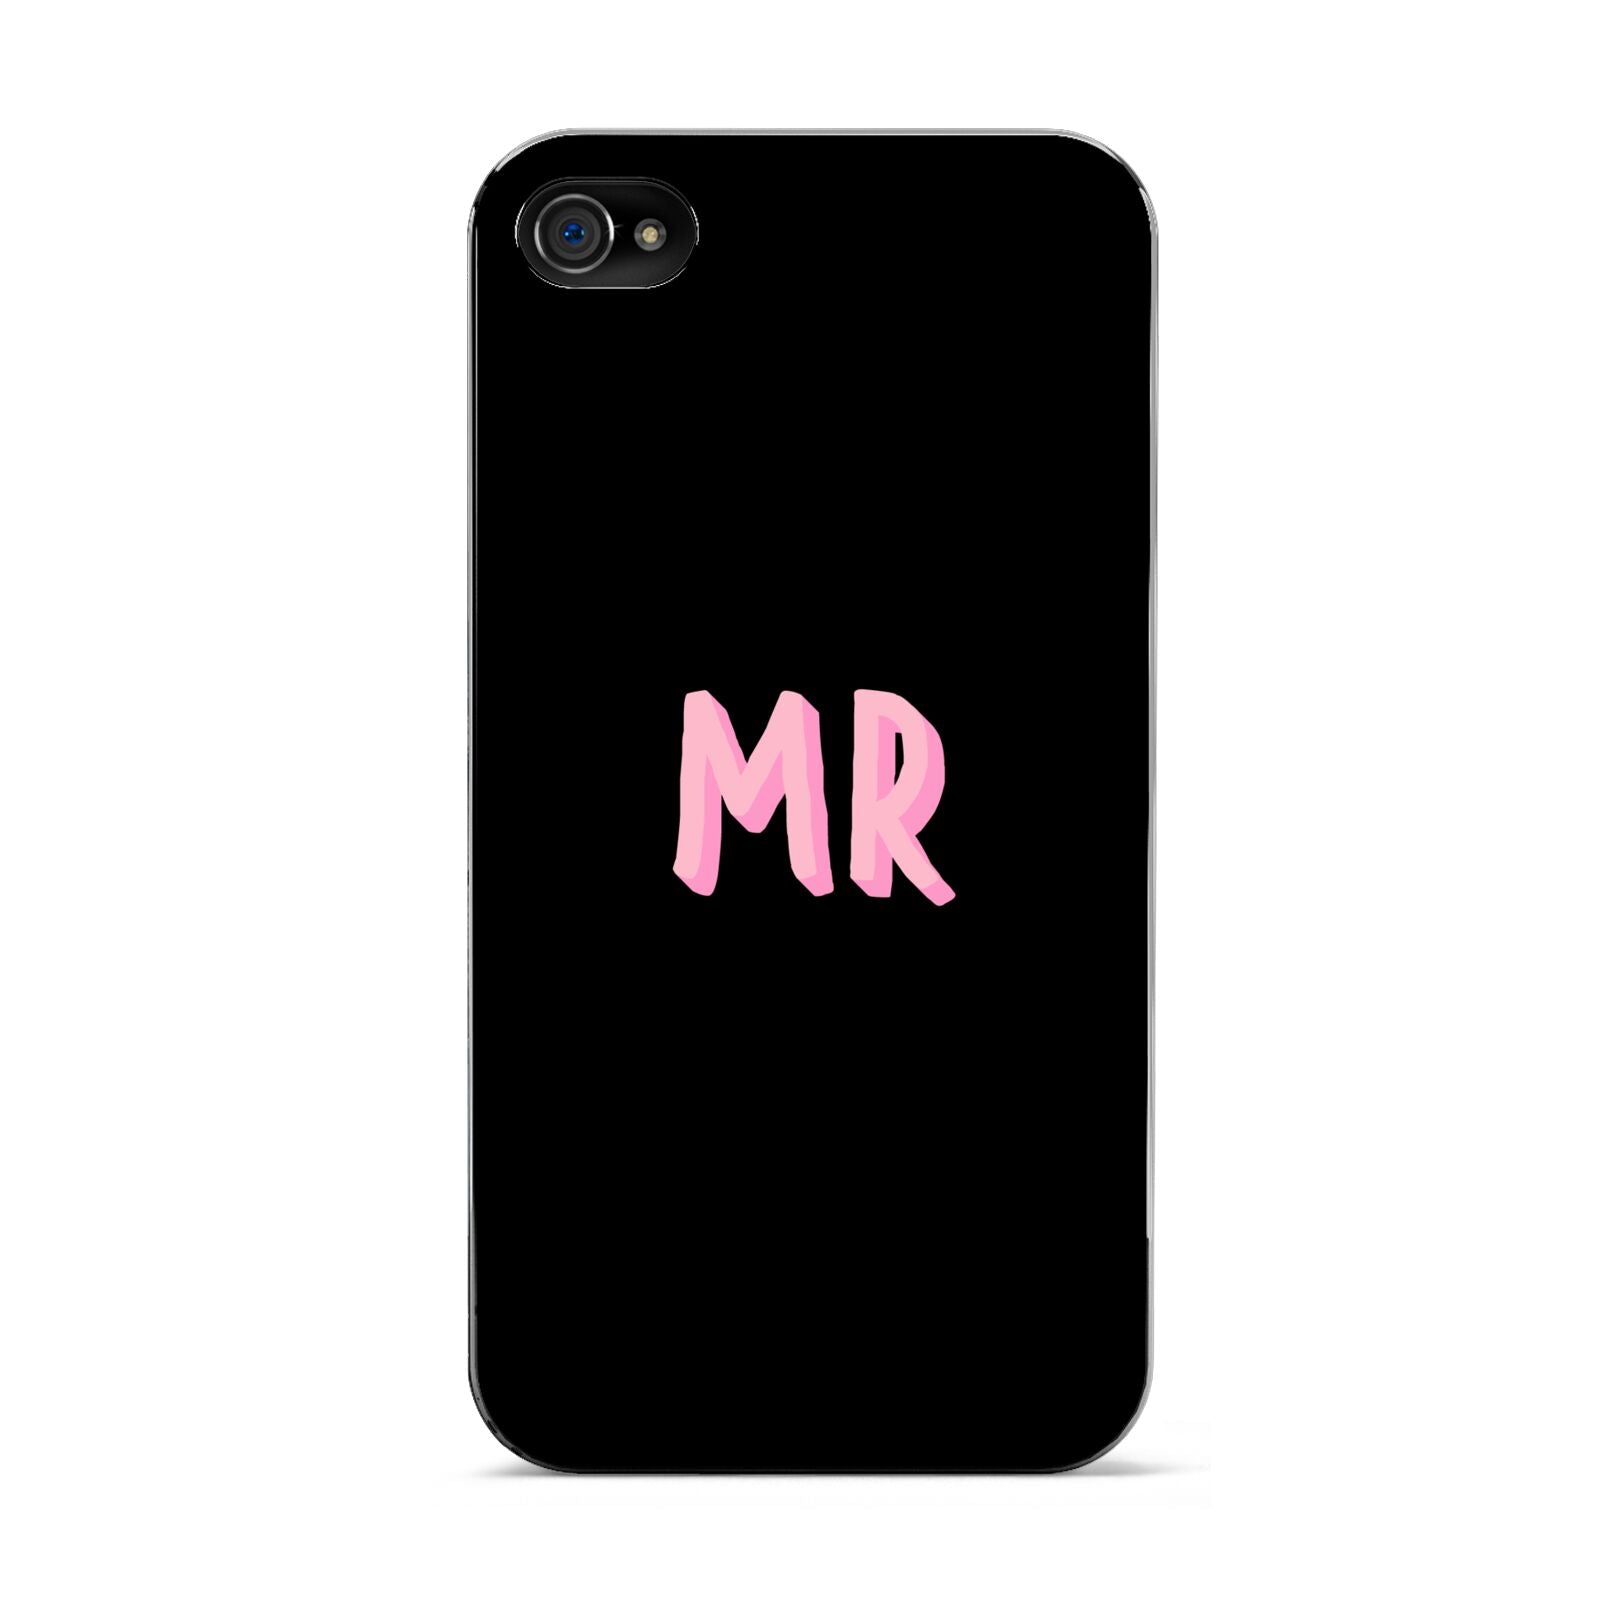 Mr Apple iPhone 4s Case